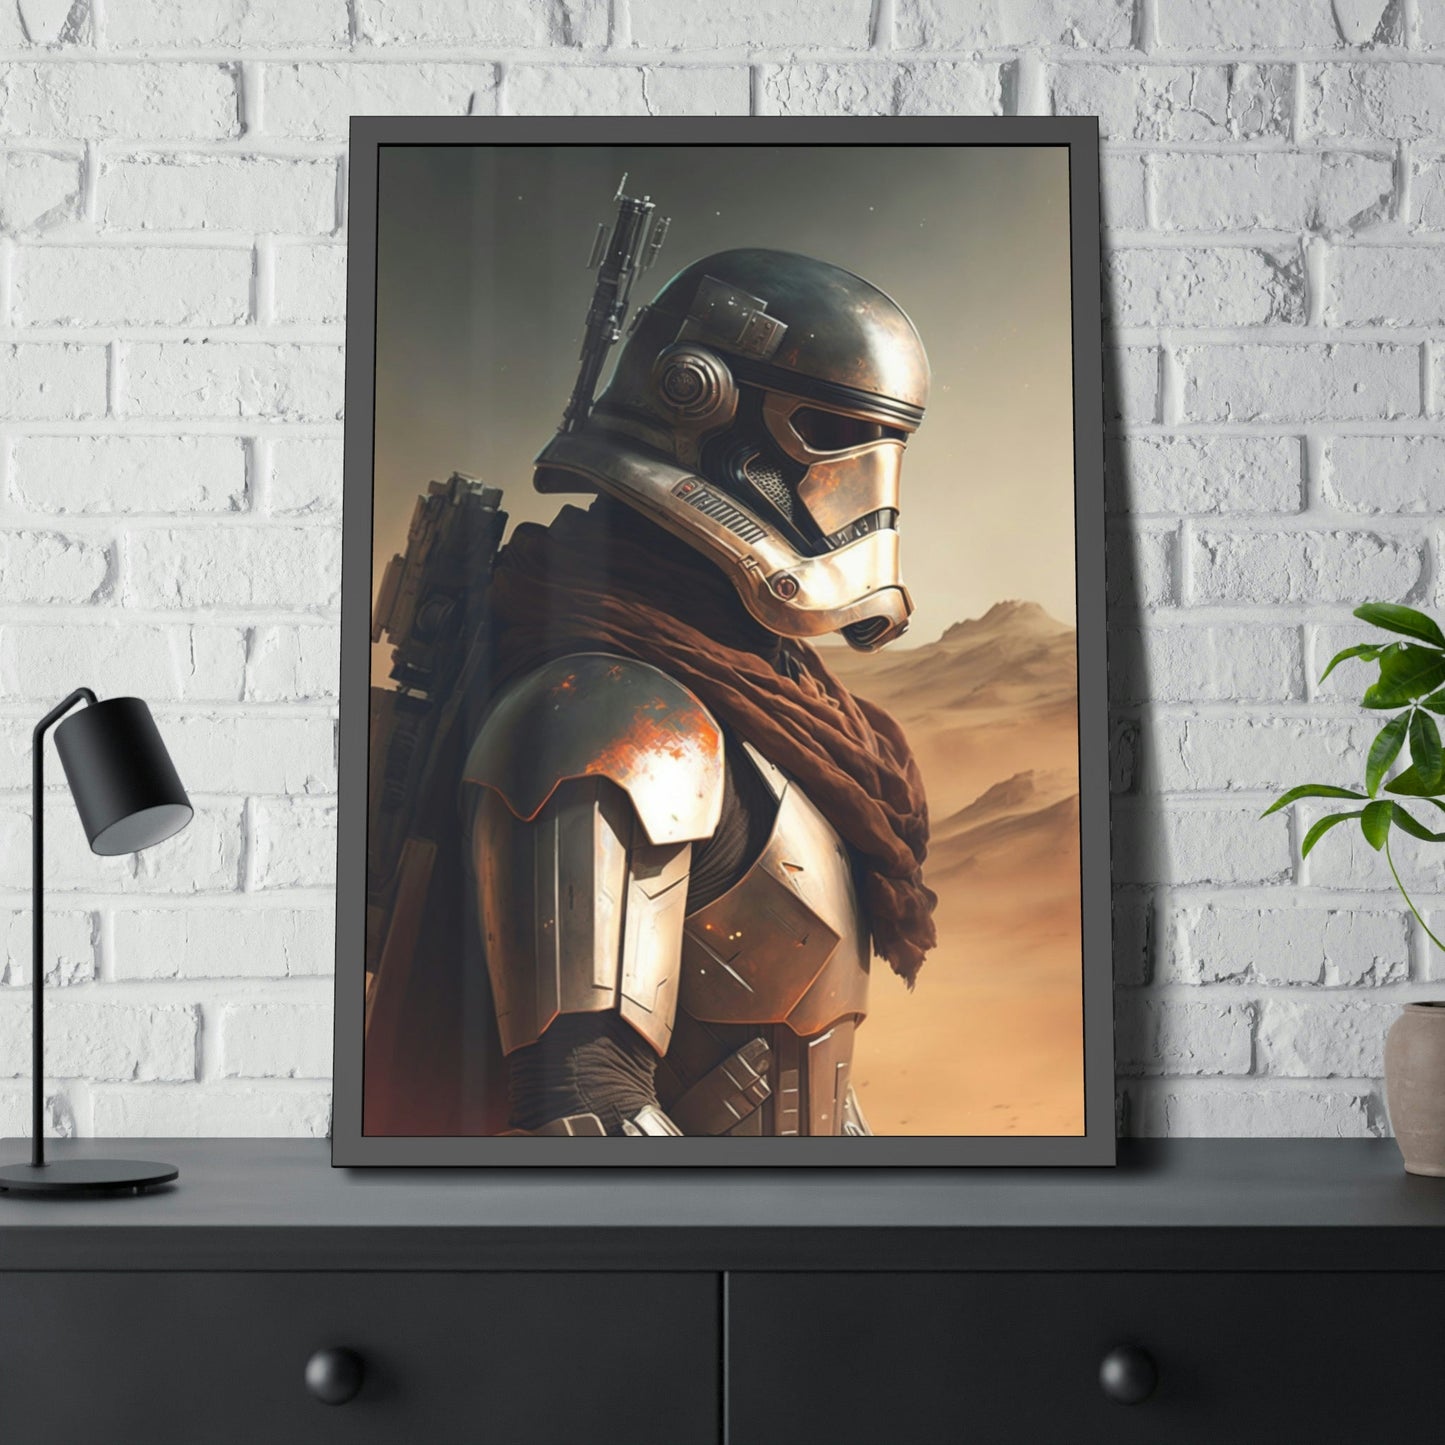 Galactic Empire Rises: Poster & Canvas Print of Star Wars Art